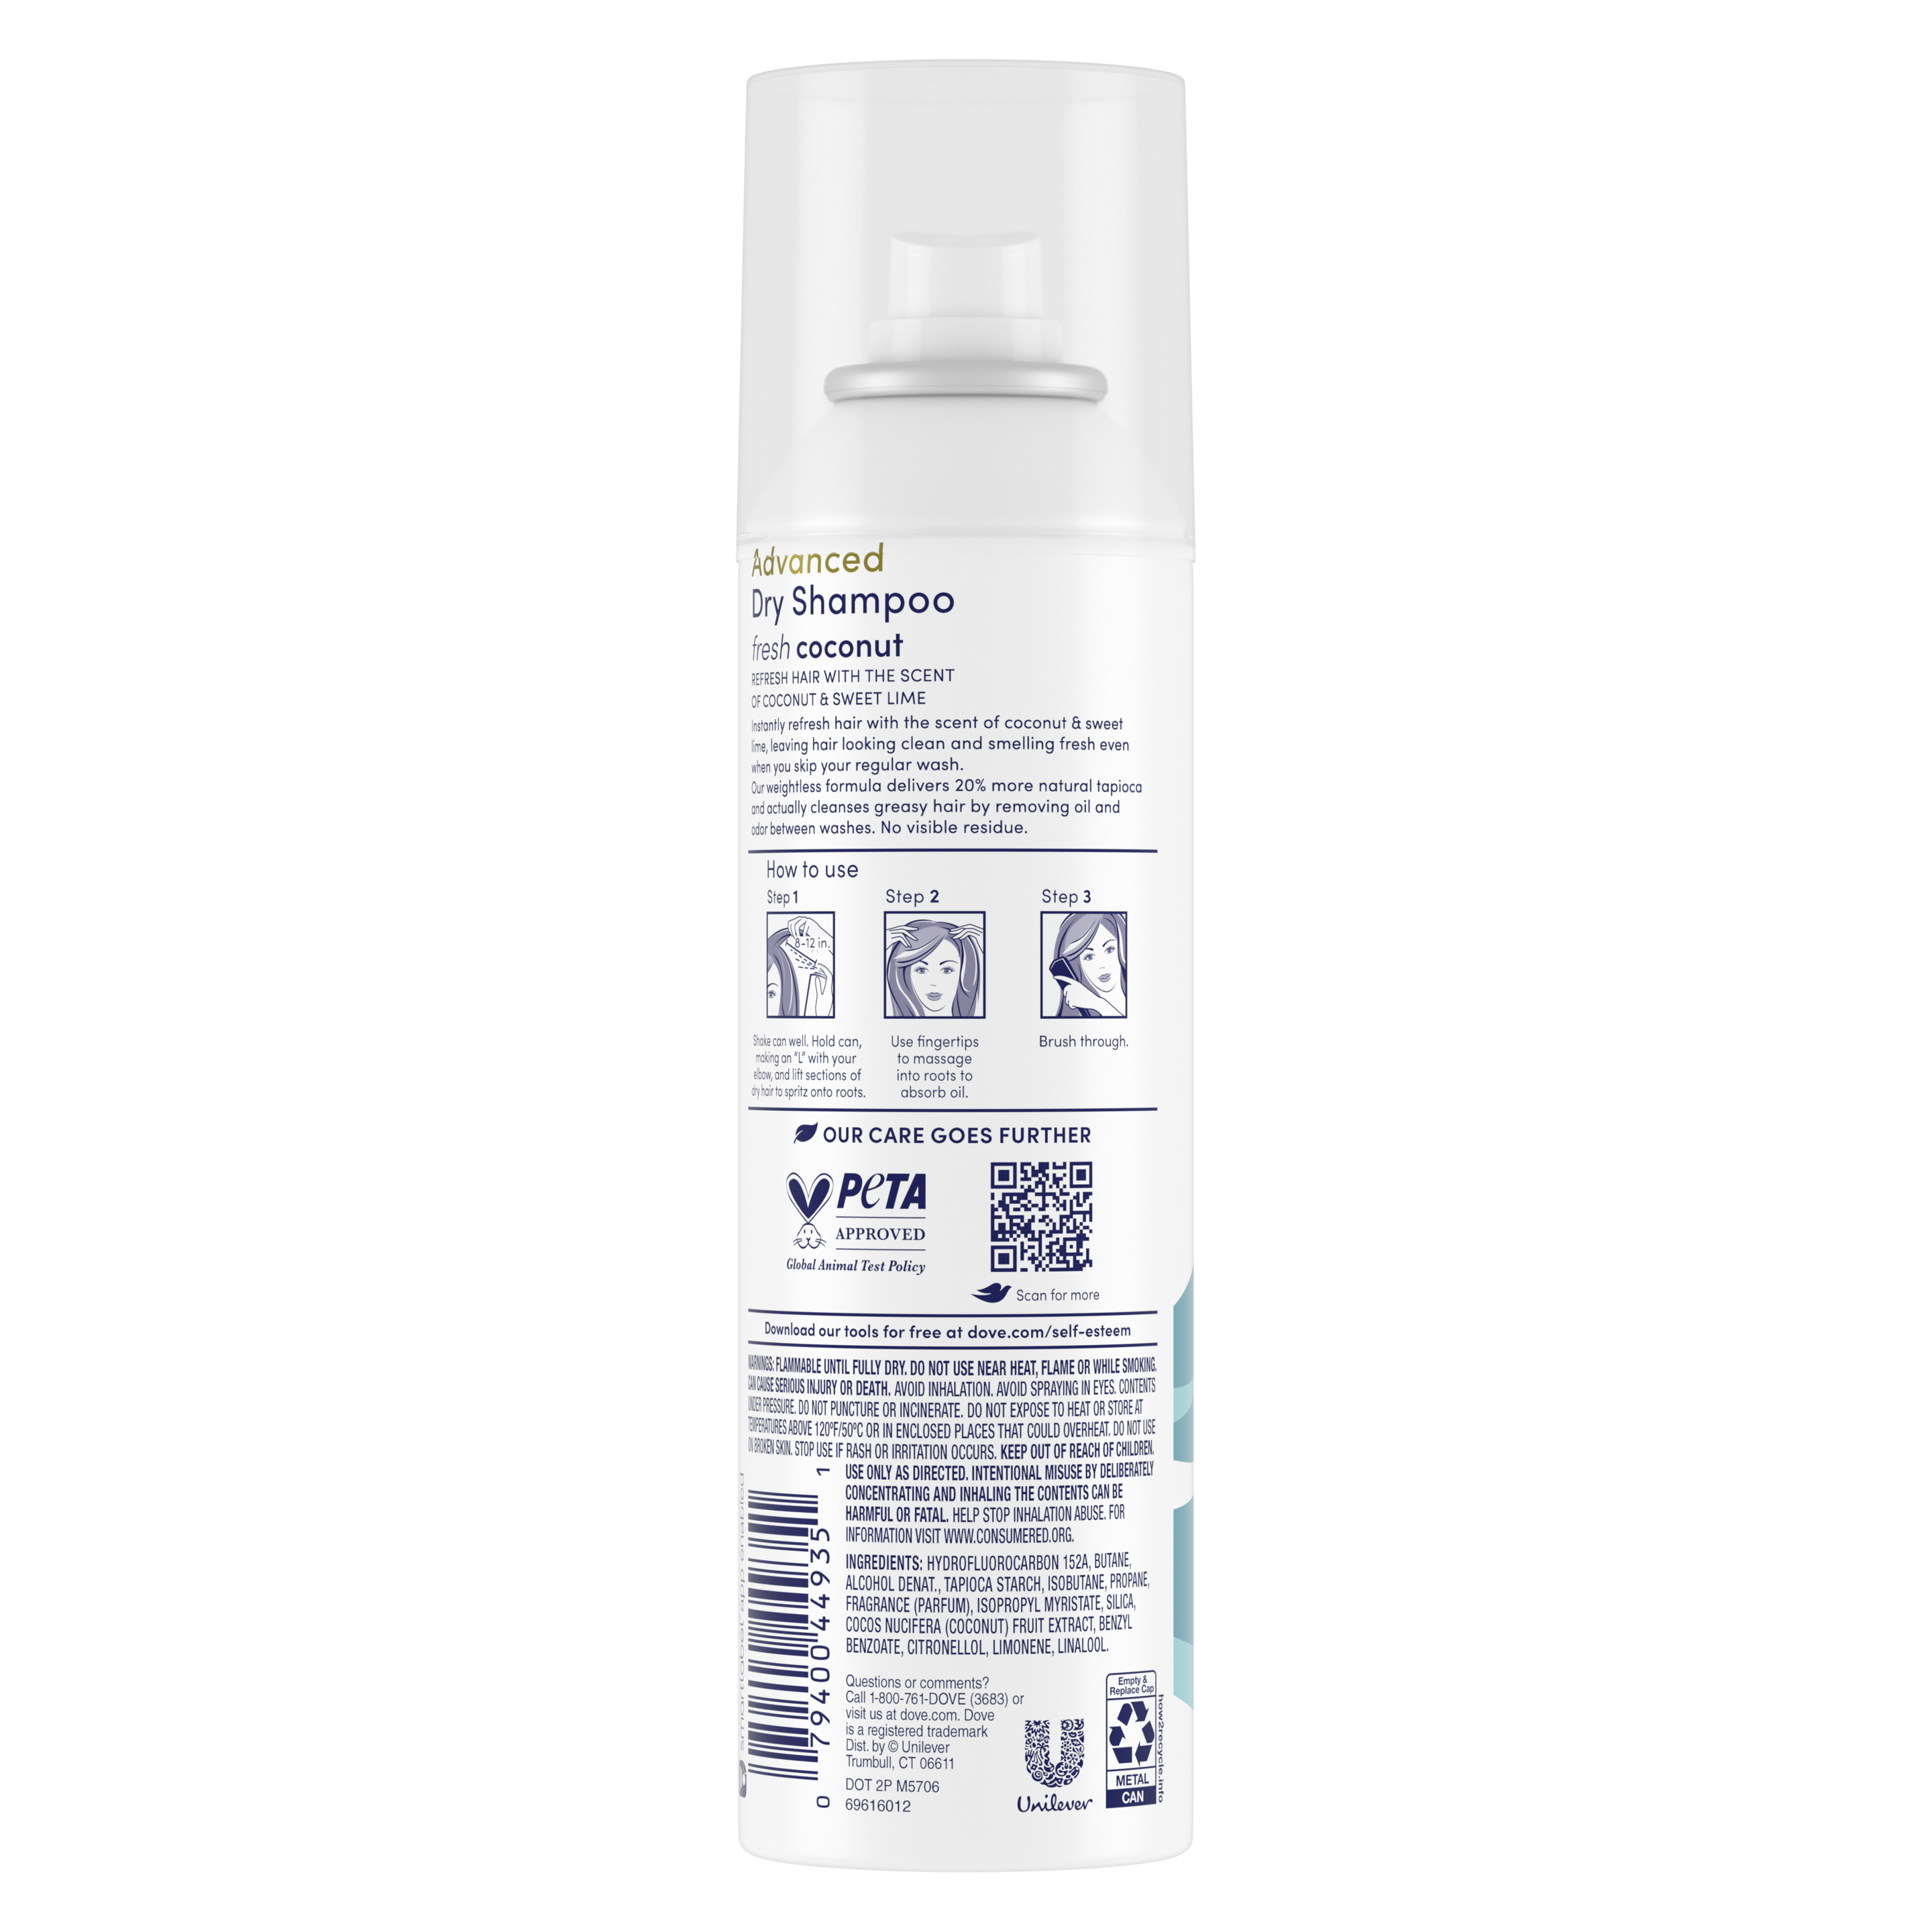 Dove Refresh+Care Fresh Coconut Dry Shampoo 5oz